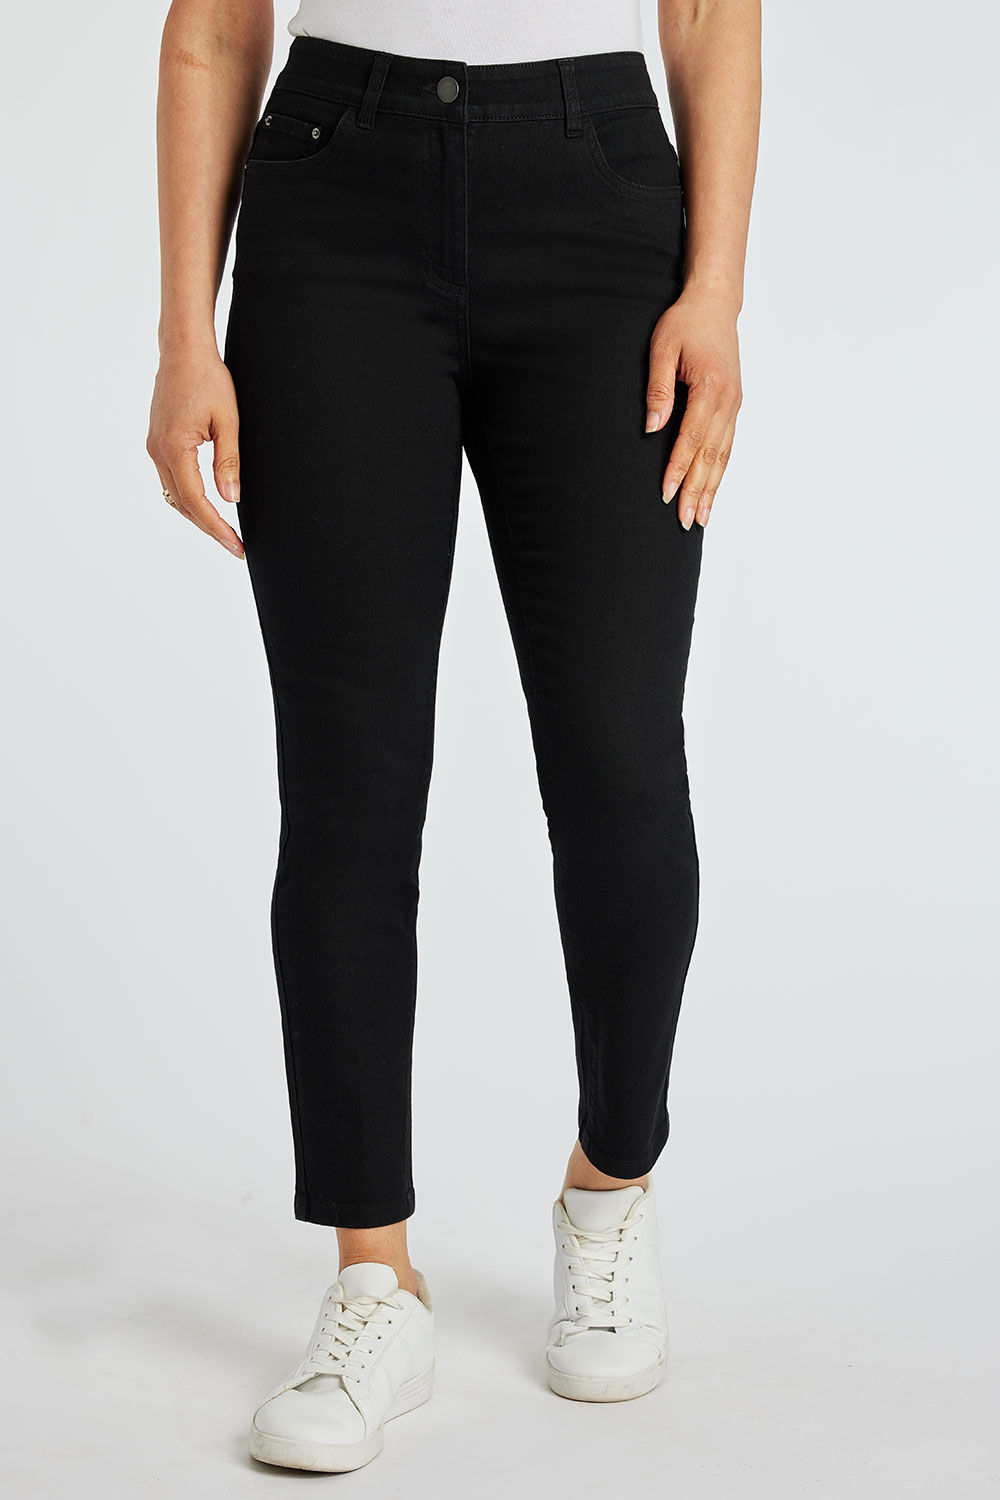 Bonmarche Women’s Black Cotton Casual The SUSIE Slim Leg Jeans, Size: 10